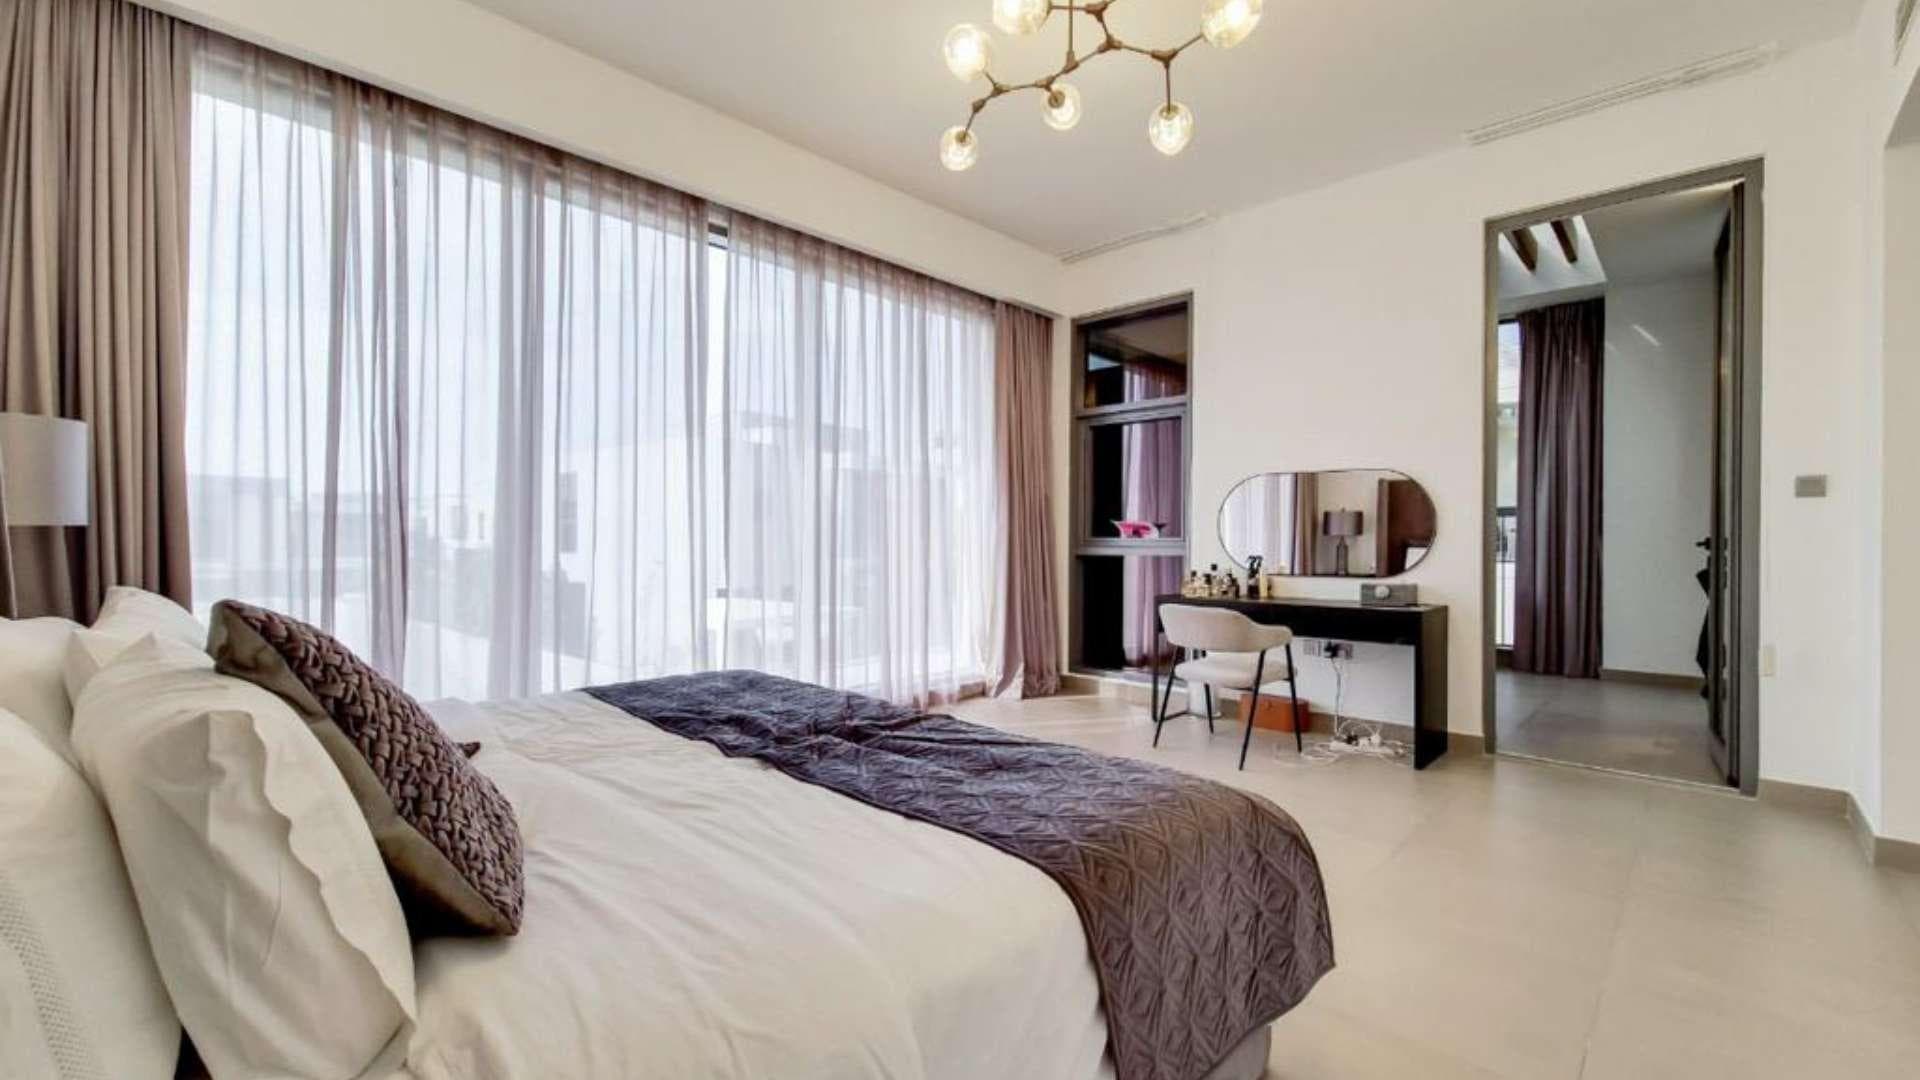 4 Bedroom Villa For Sale Sidra Villas Lp23787 Eda466138e37400.jpg